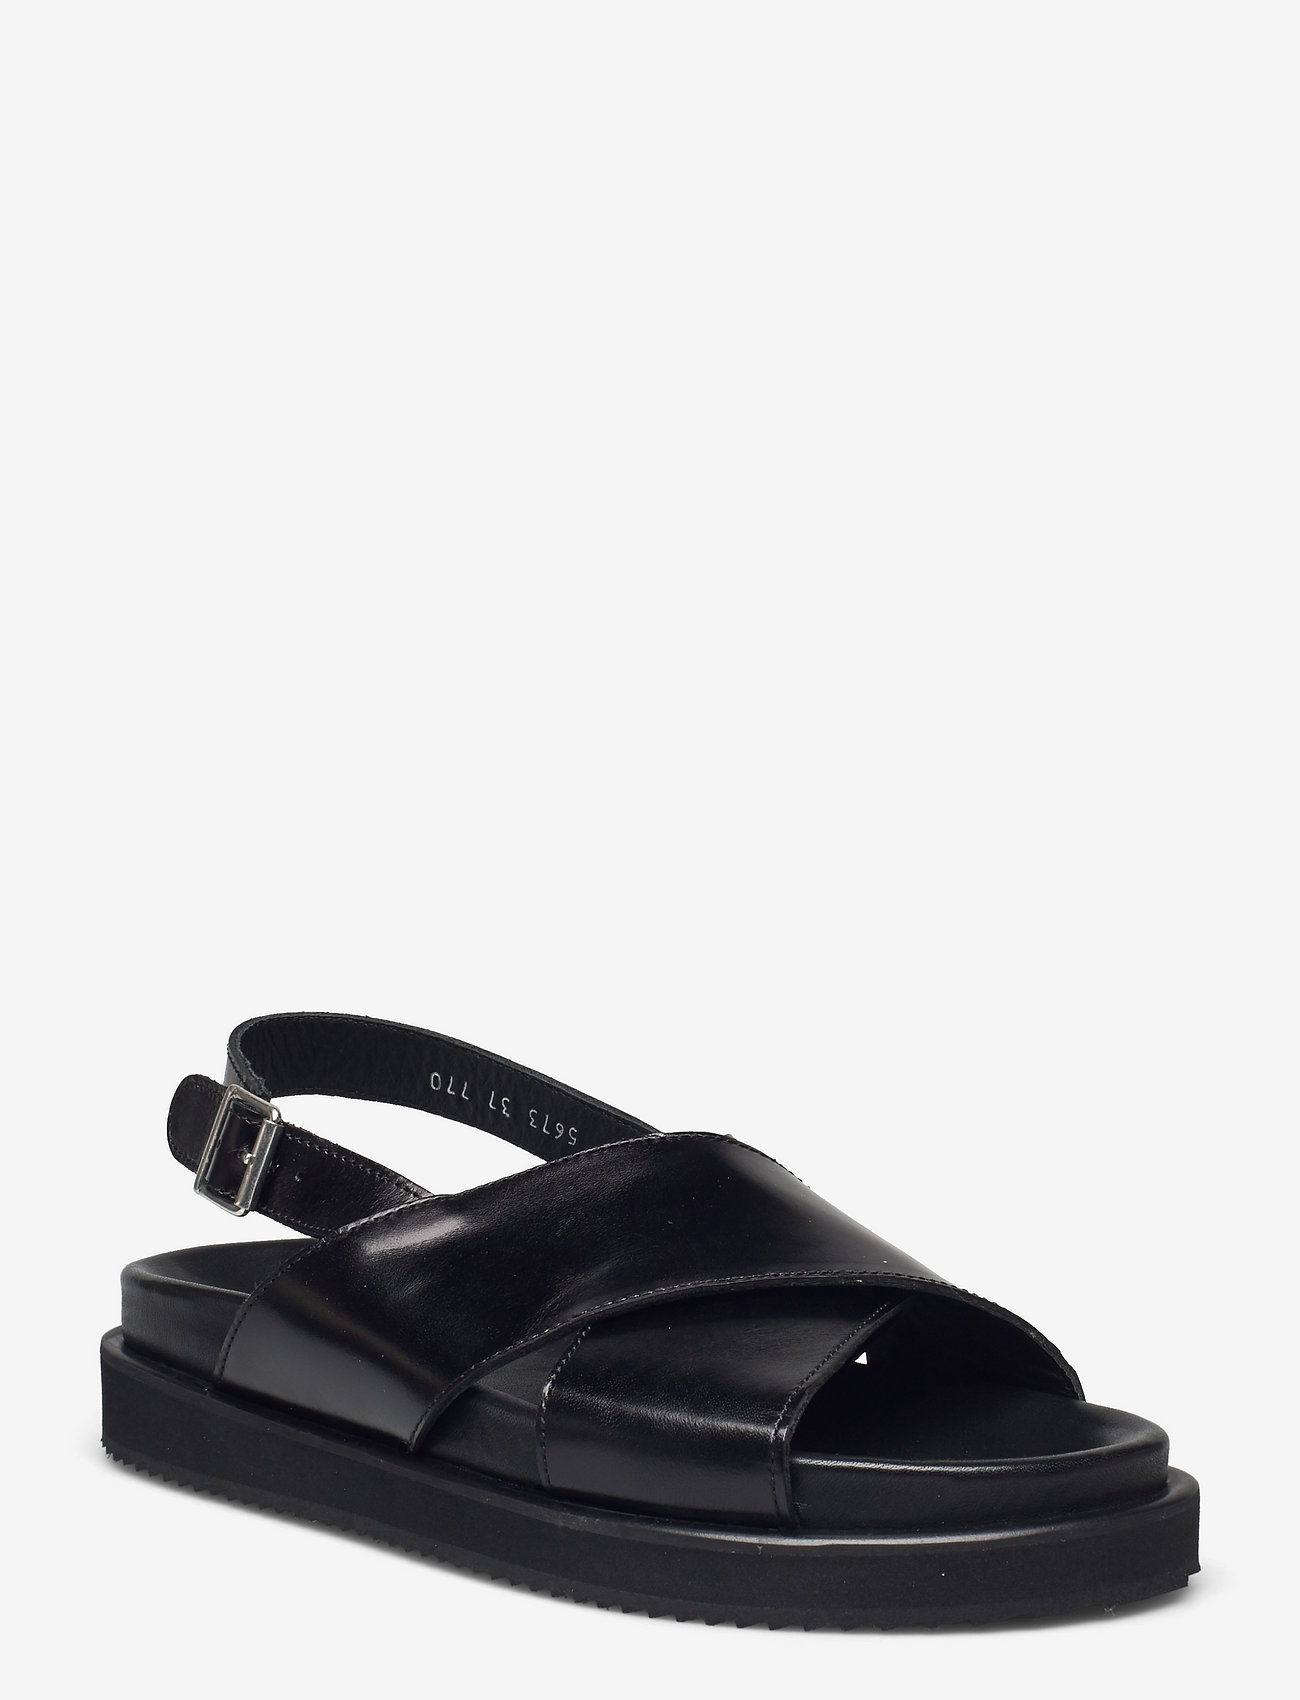 ANGULUS - Sandals - flat - open toe - op - platte sandalen - 1604/1835 black - 0